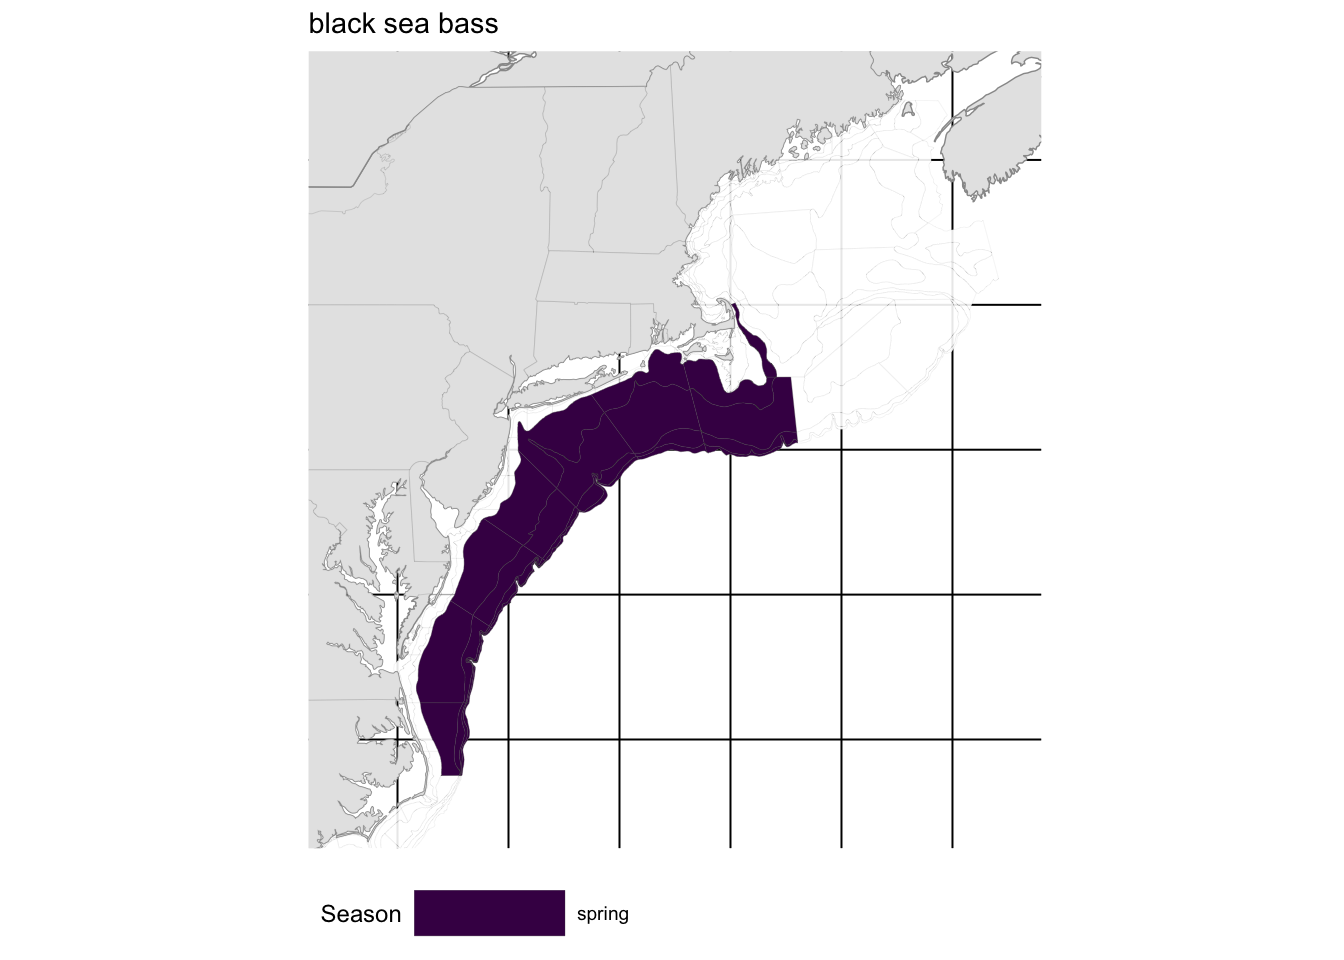 Strata map for the black sea bass (Centropristis striata) stock on the NE shelf.